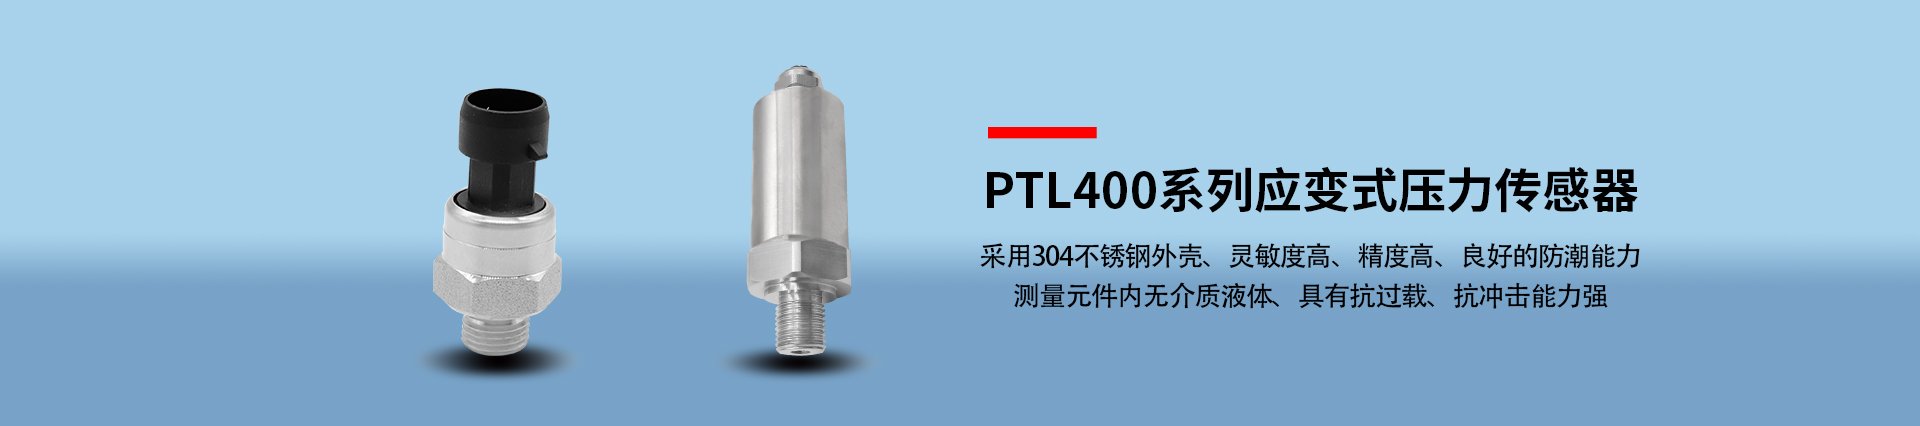 PTL400系列应变式压力传感器